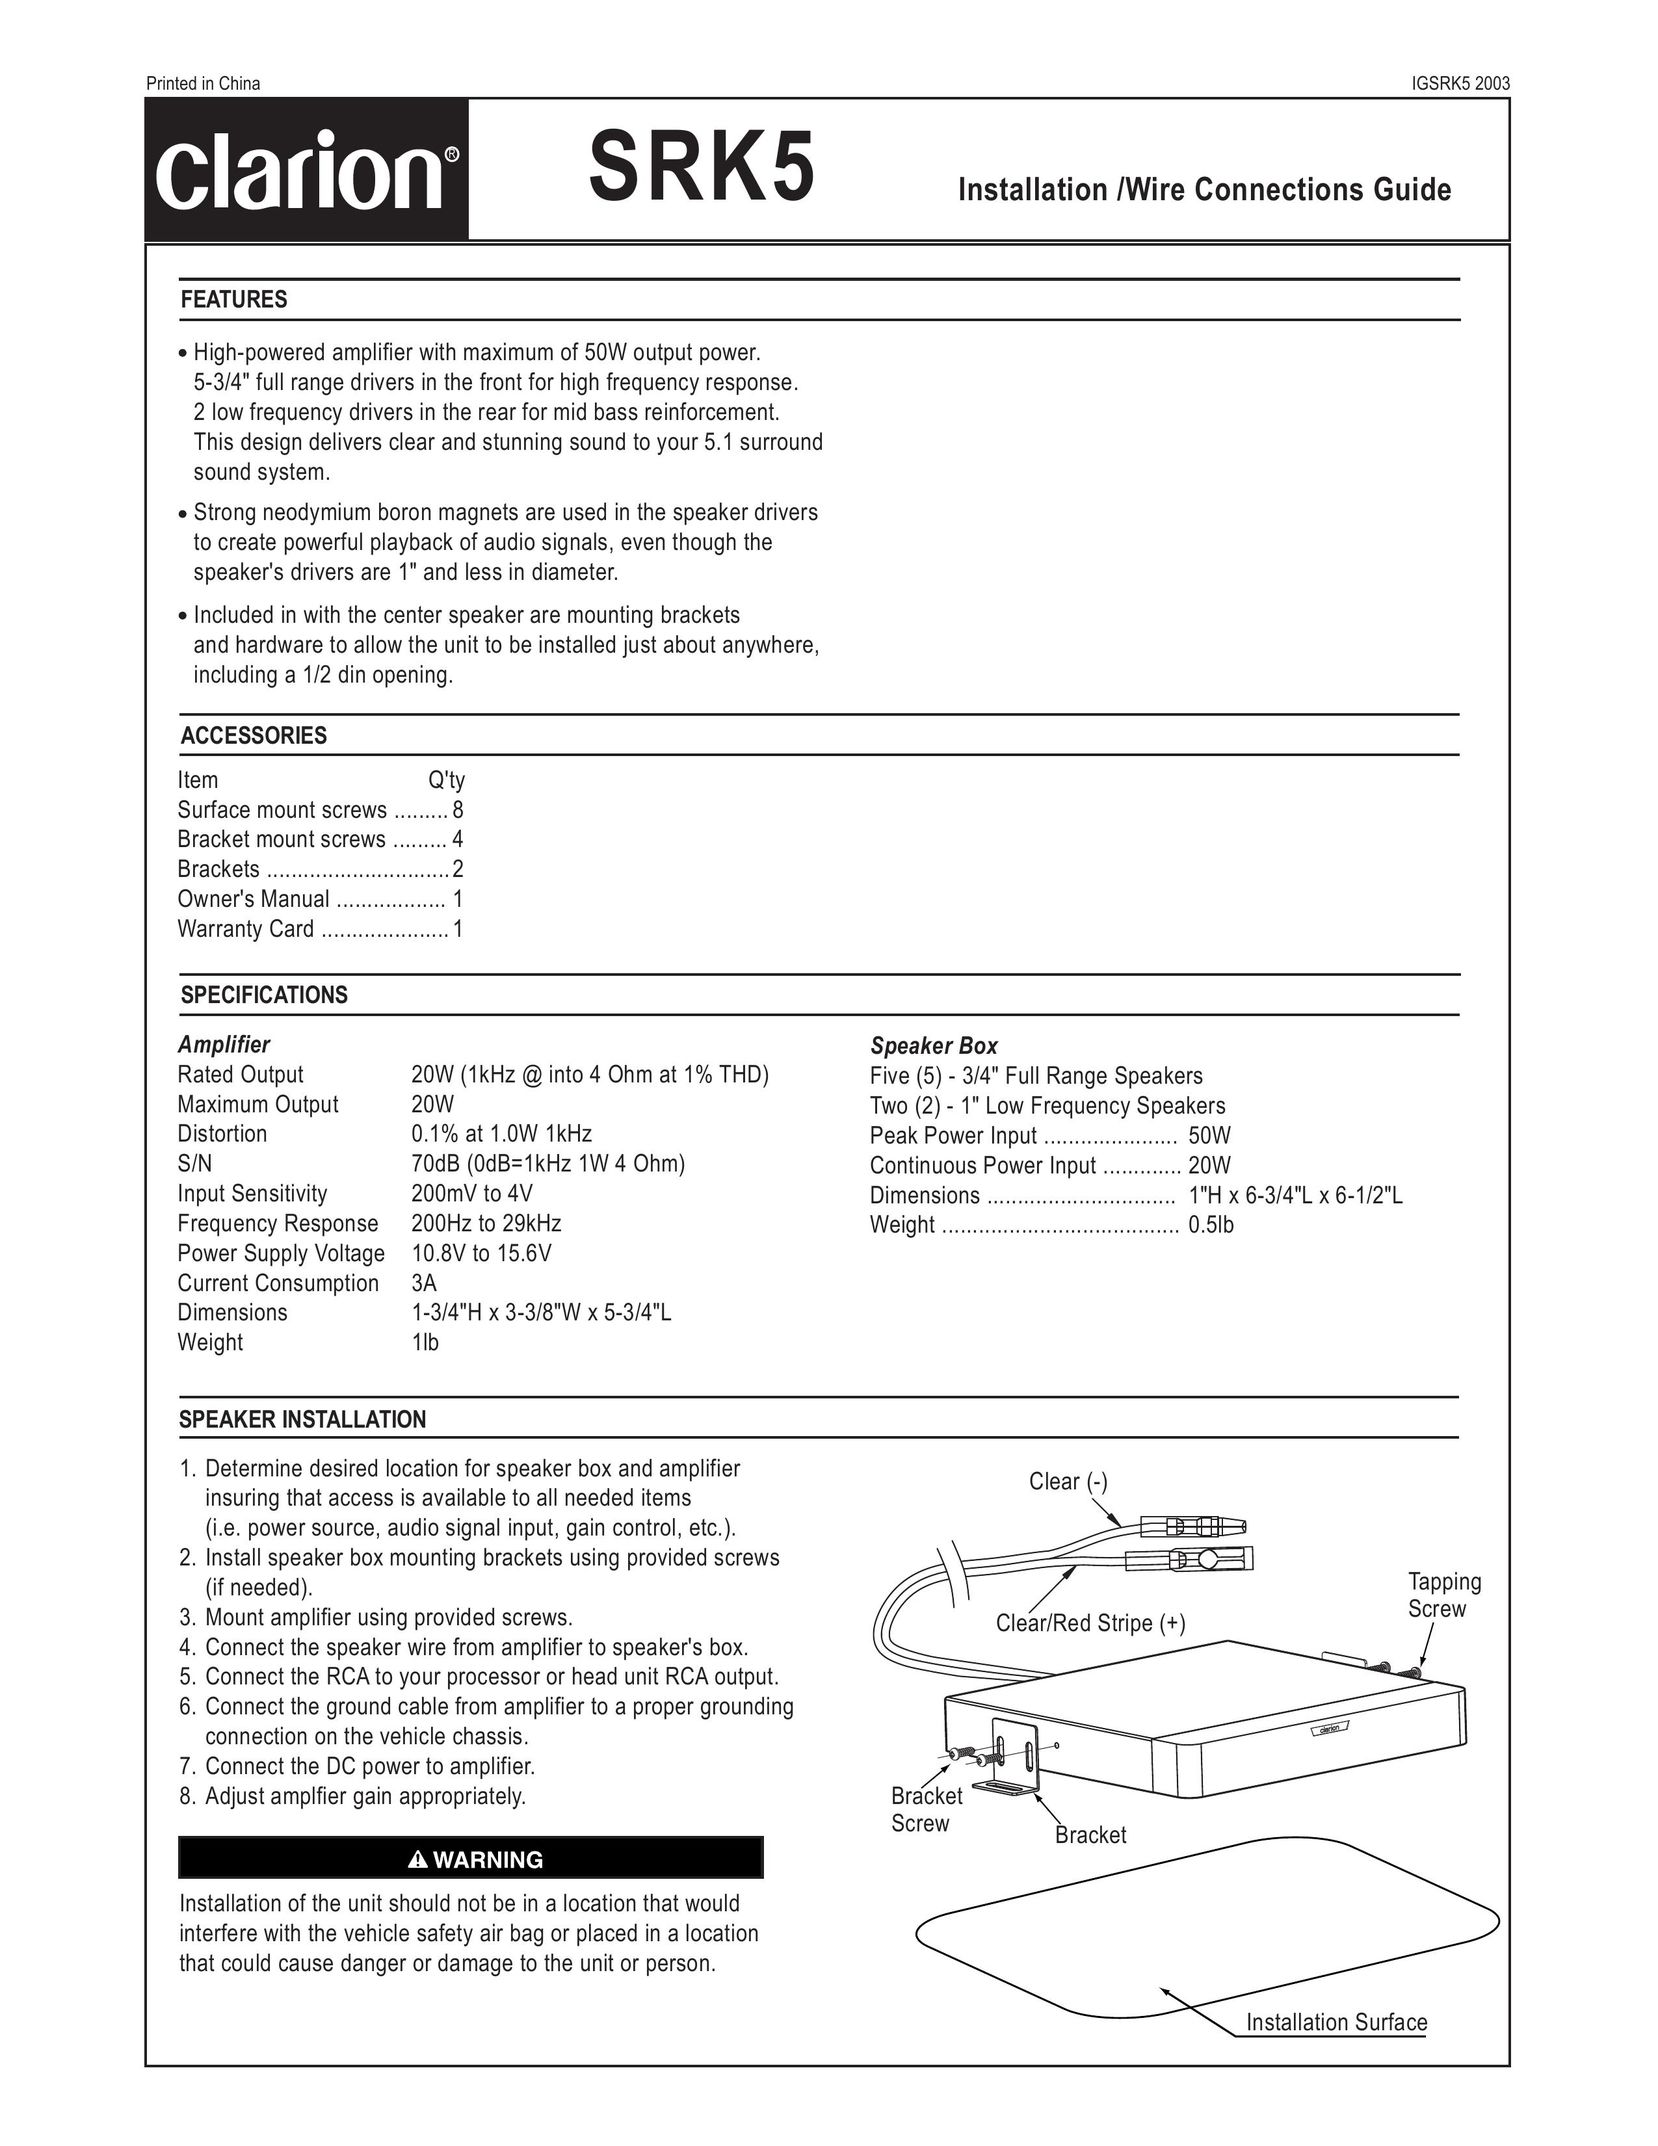 Clarion SRK5 Car Amplifier User Manual